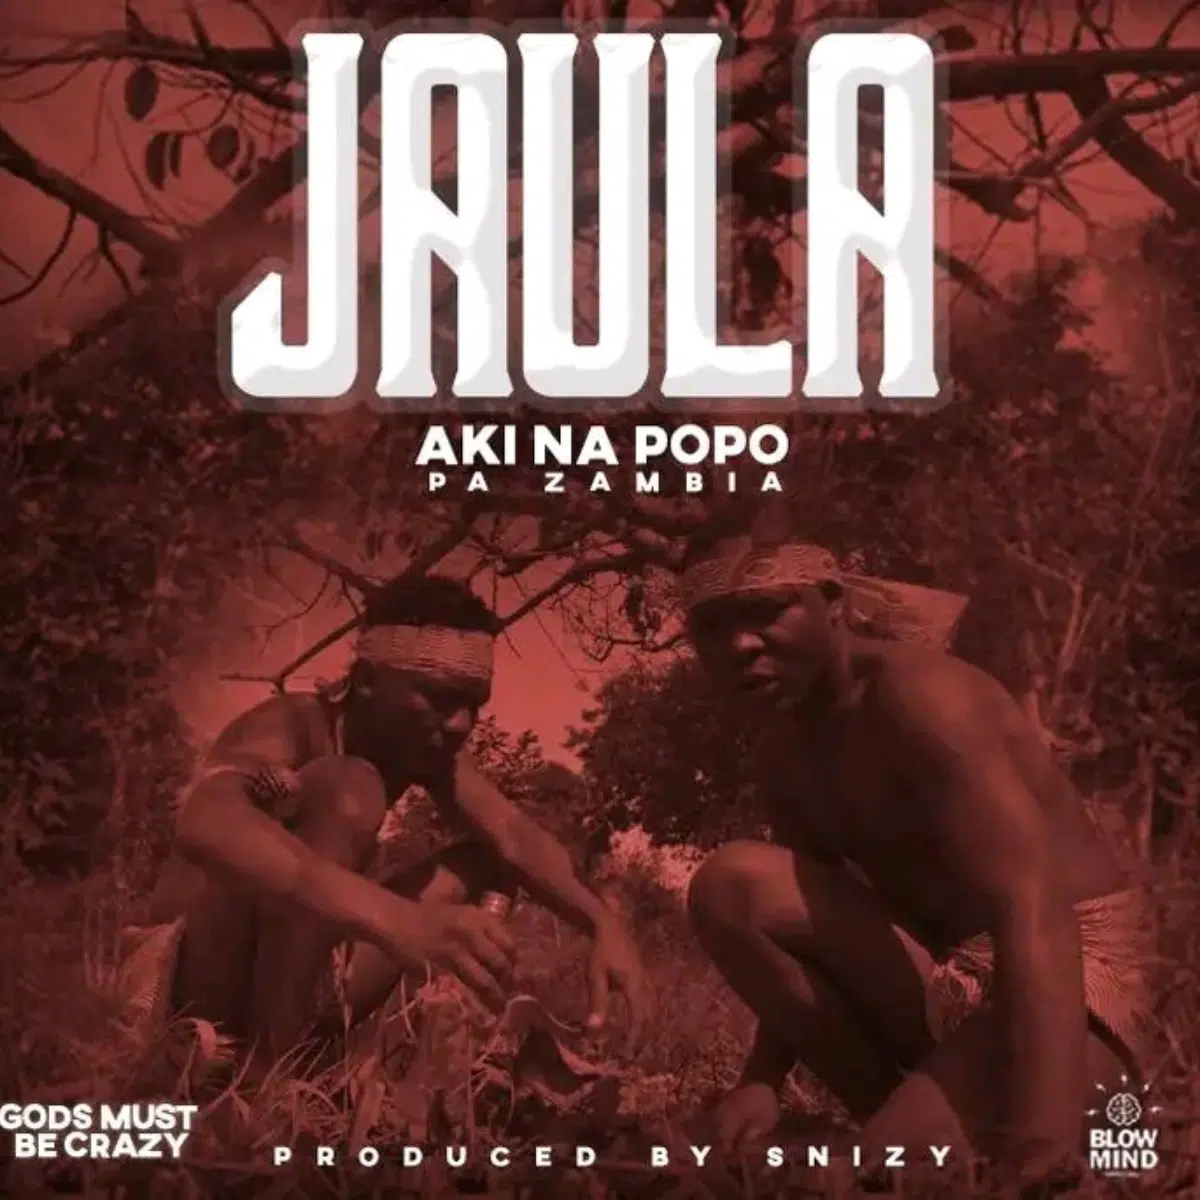 DOWNLOAD: Aki Na Popo – “Jaula” Mp3